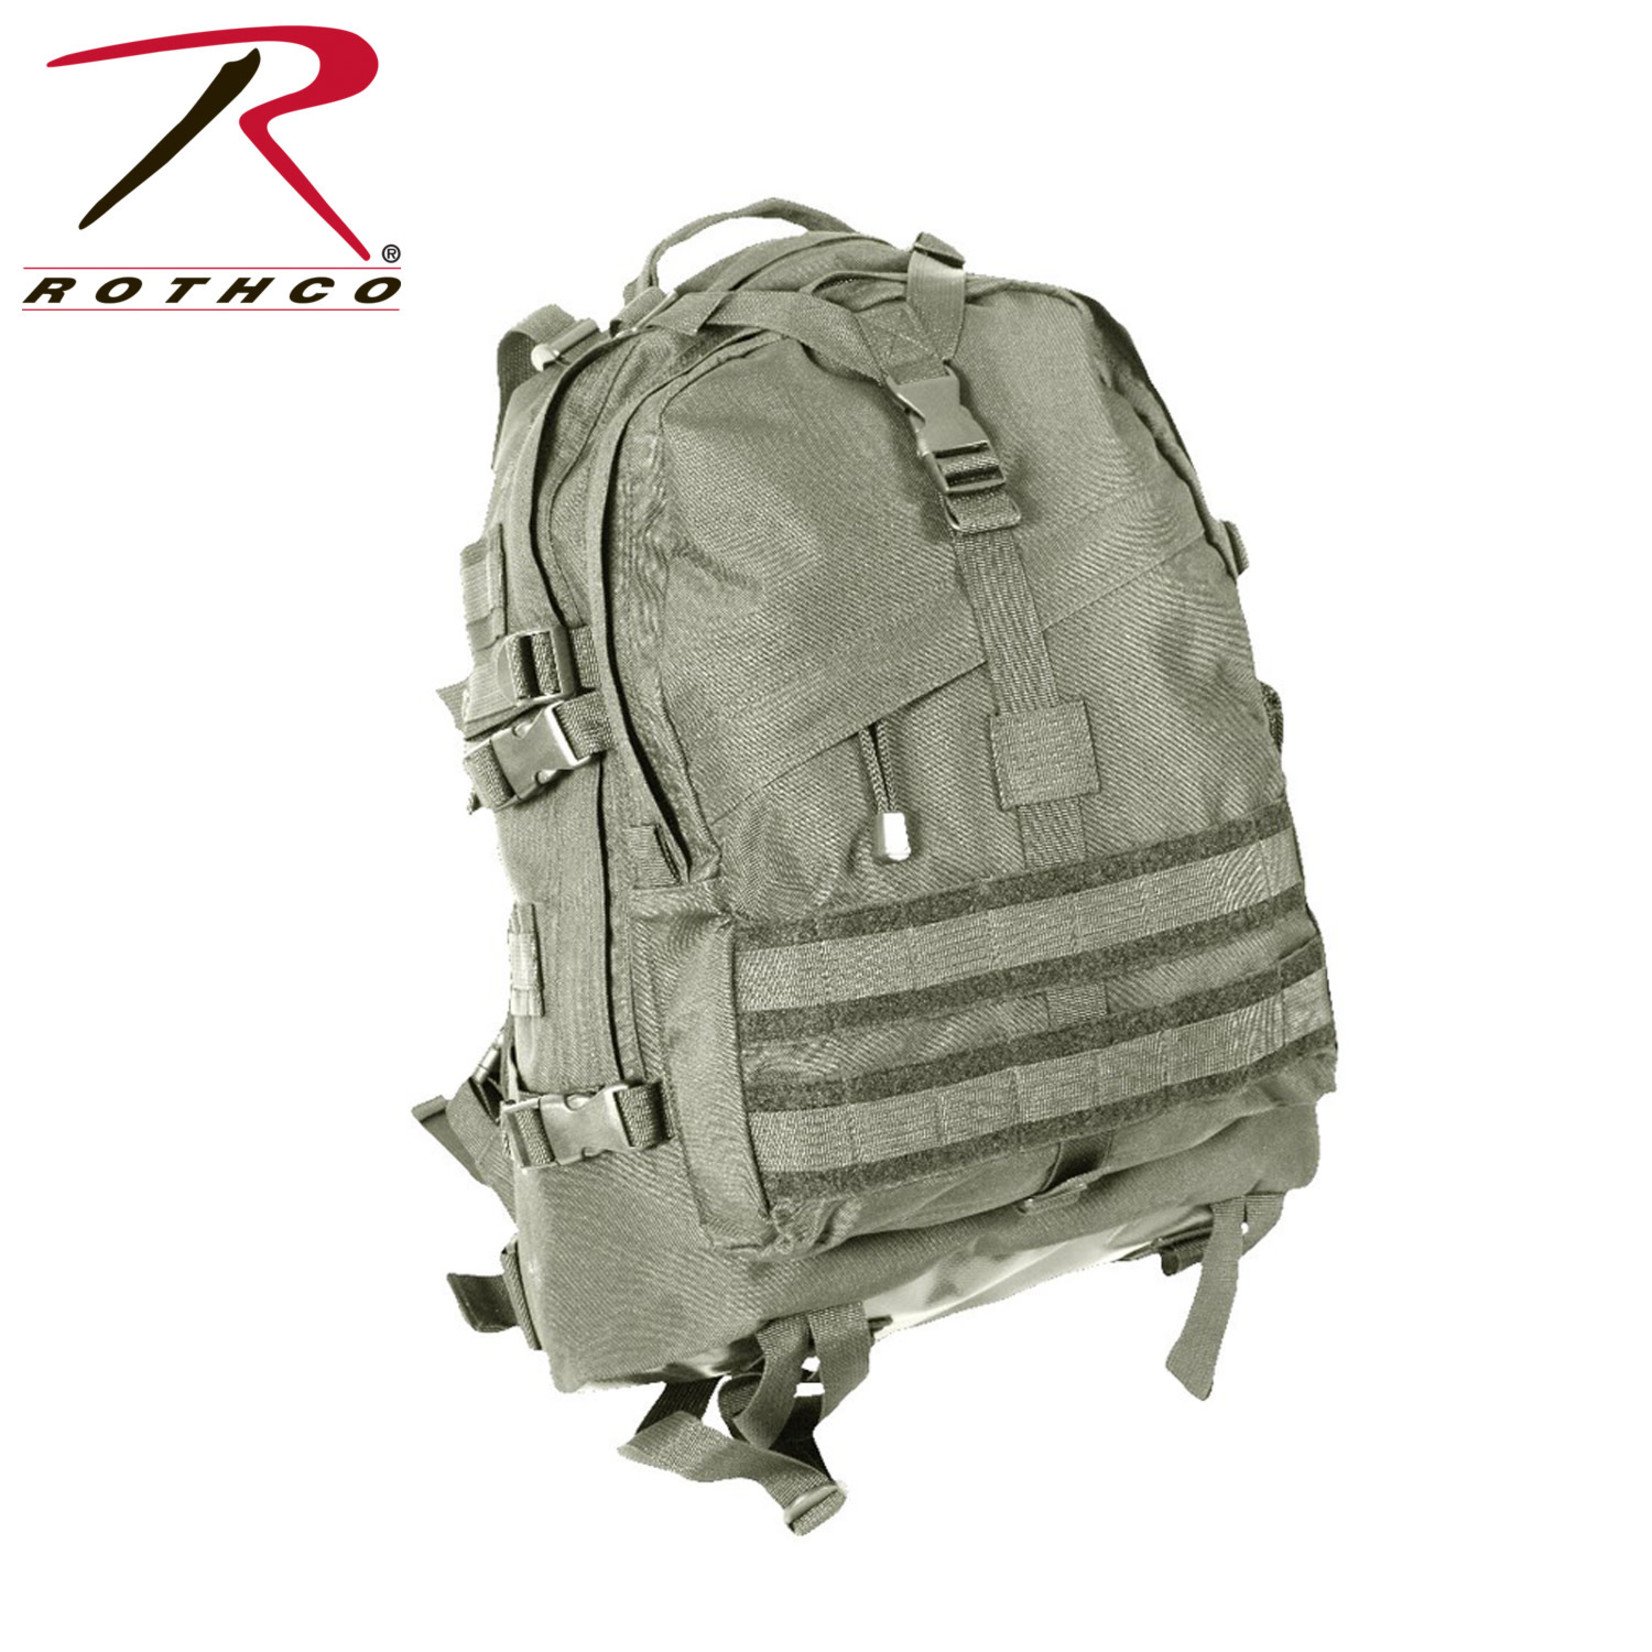 Rothco Rothco Large Transport Backpack